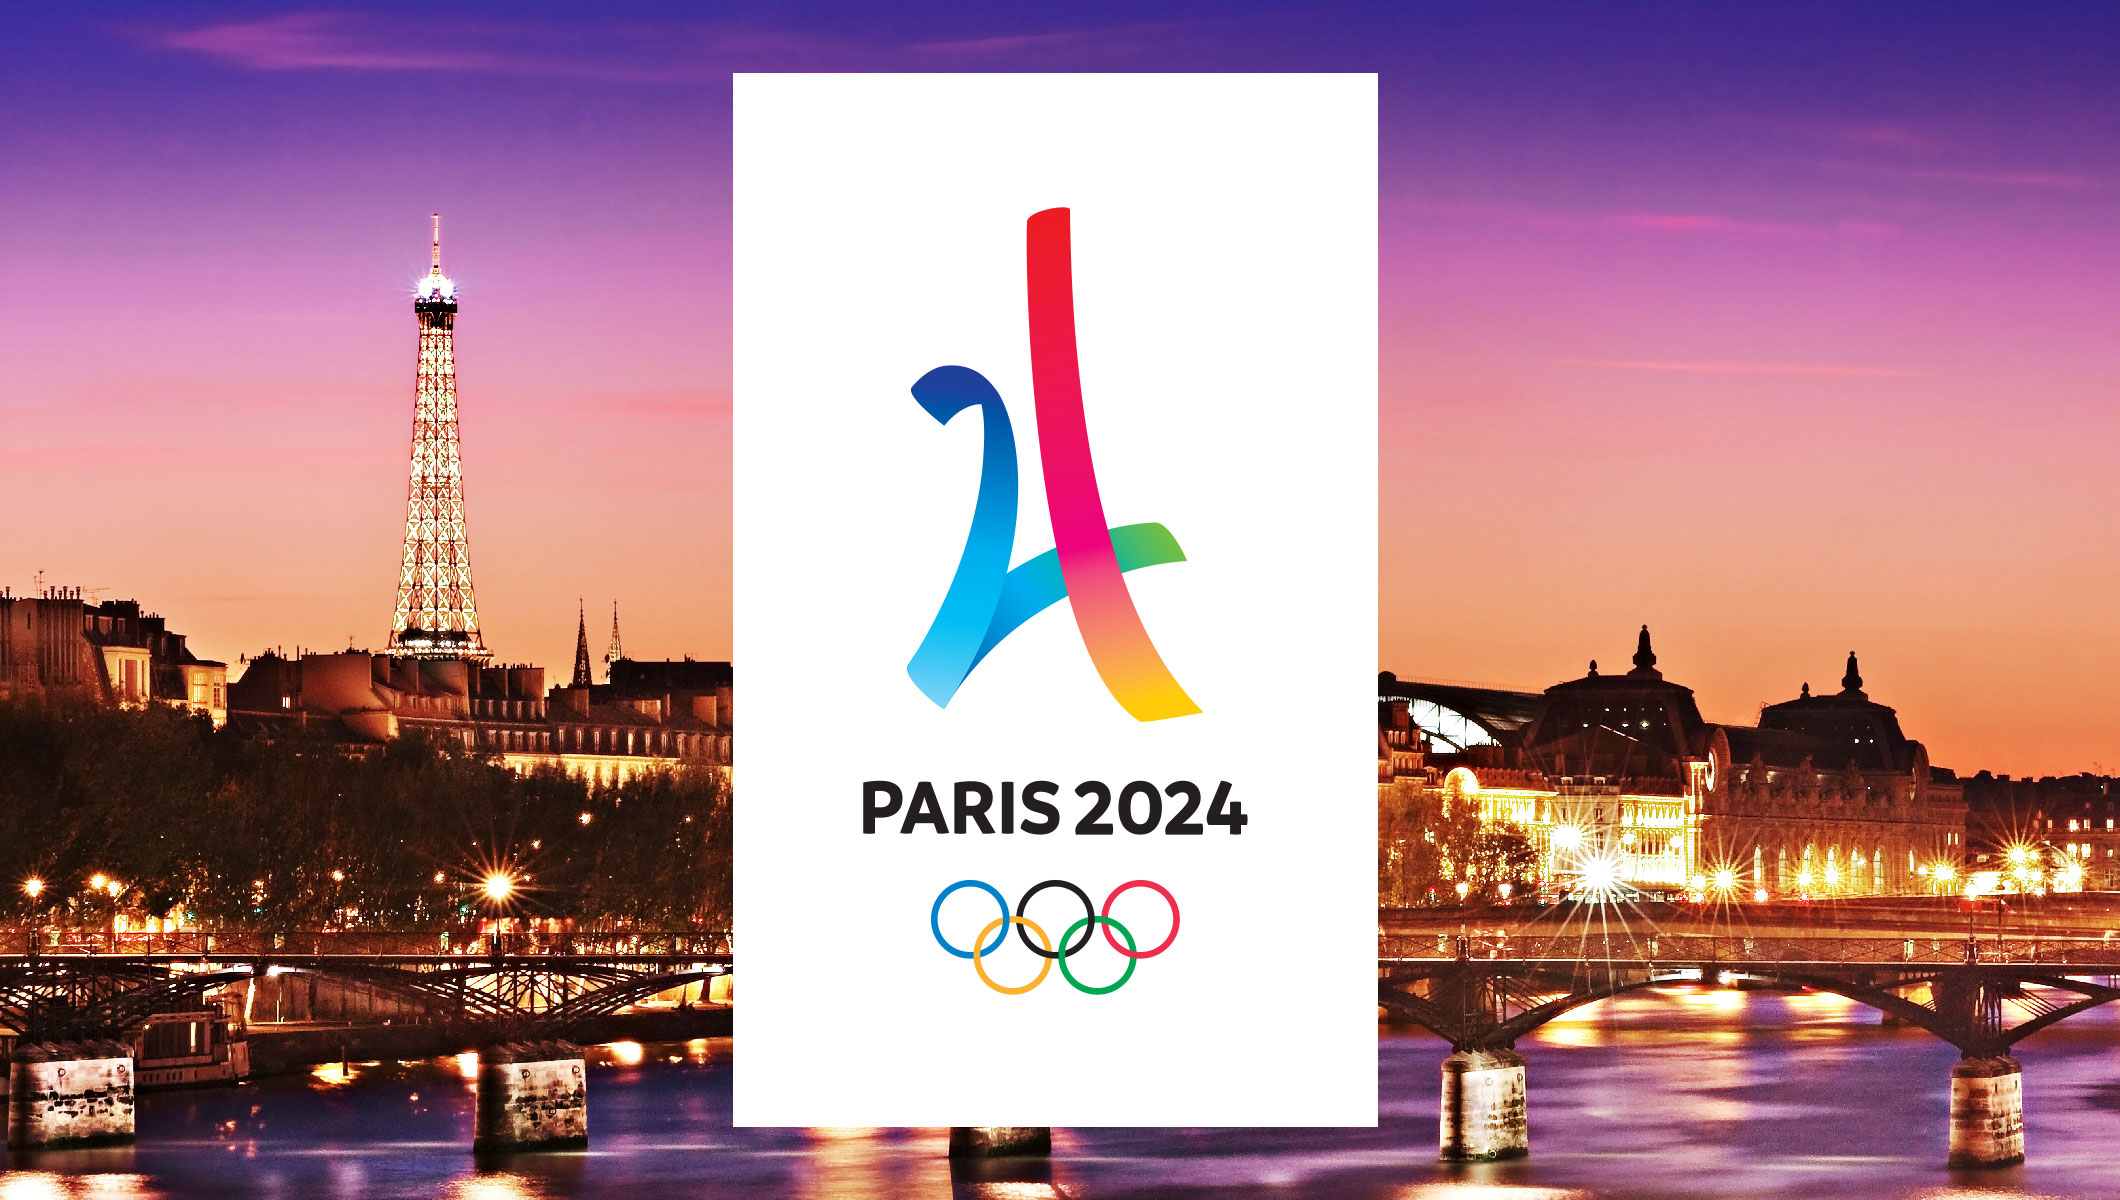 Лето 2024 картинки. Олимпийские игры в Париже 2024. Олимпийских игр–2024 в Париже лого. Символ олимпиады 2024 в Париже.